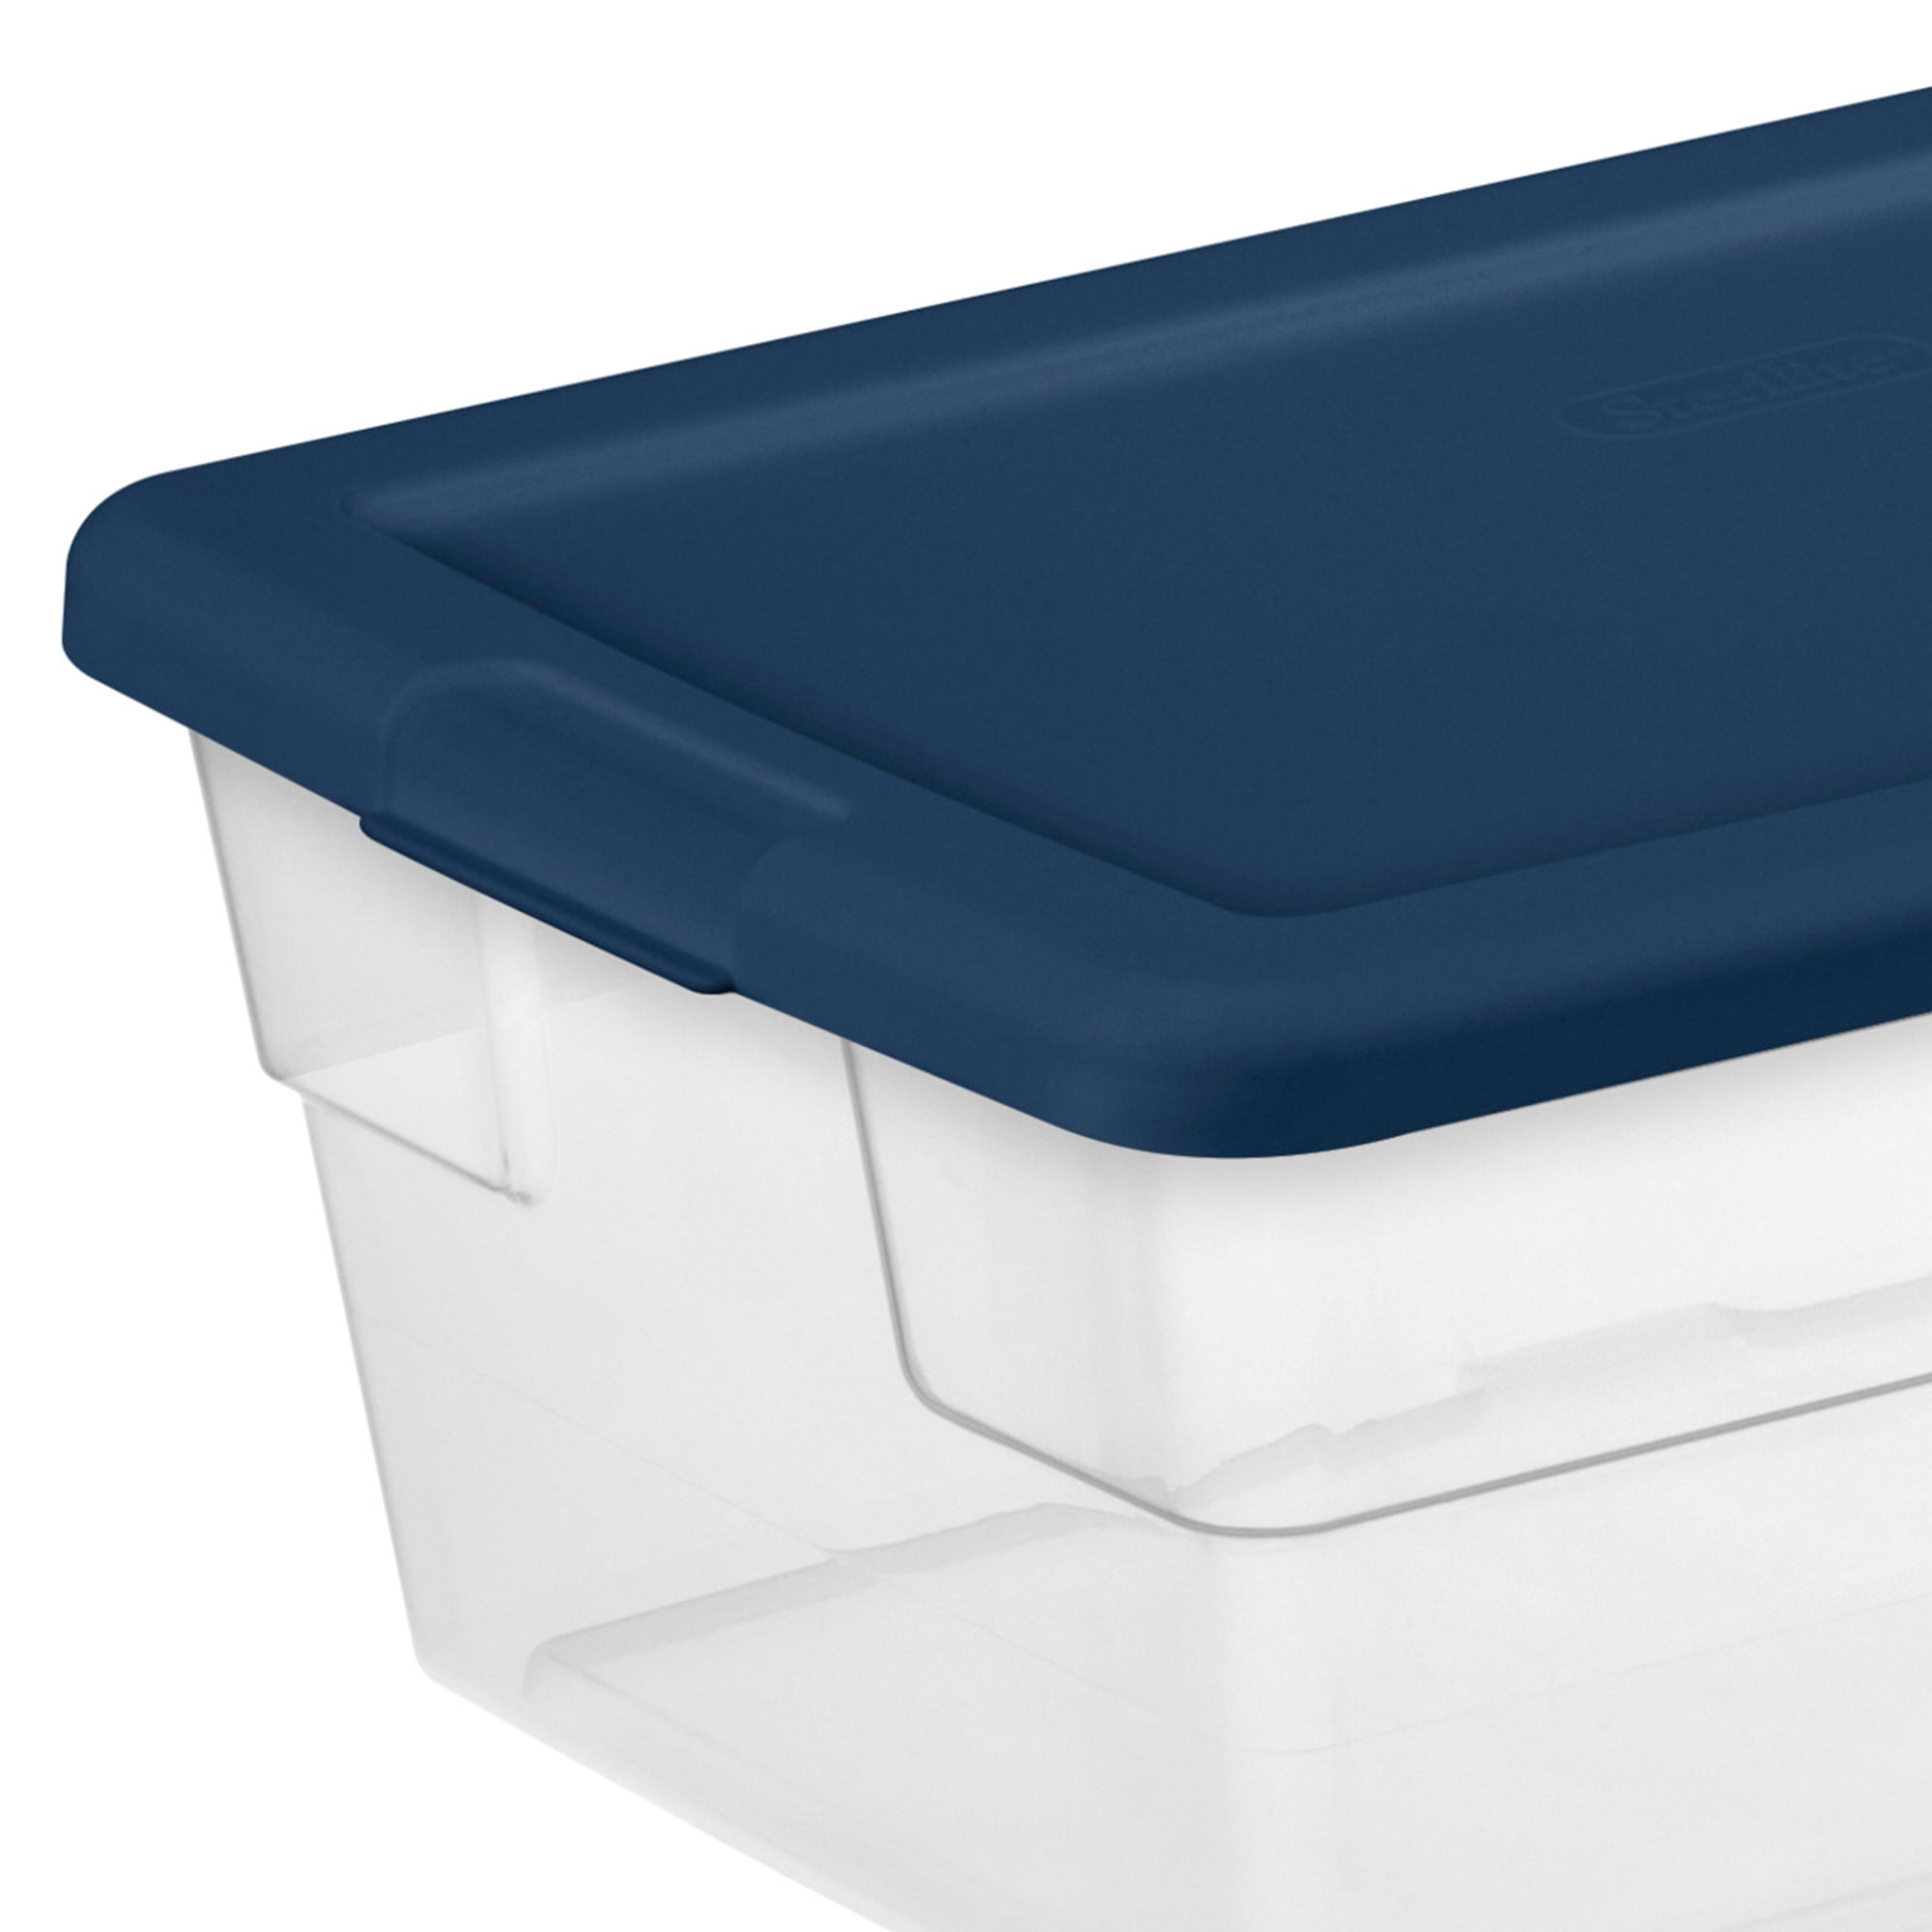 Sterilite 56 Qt. Storage Box in Blue and Clear Plastic 16591008